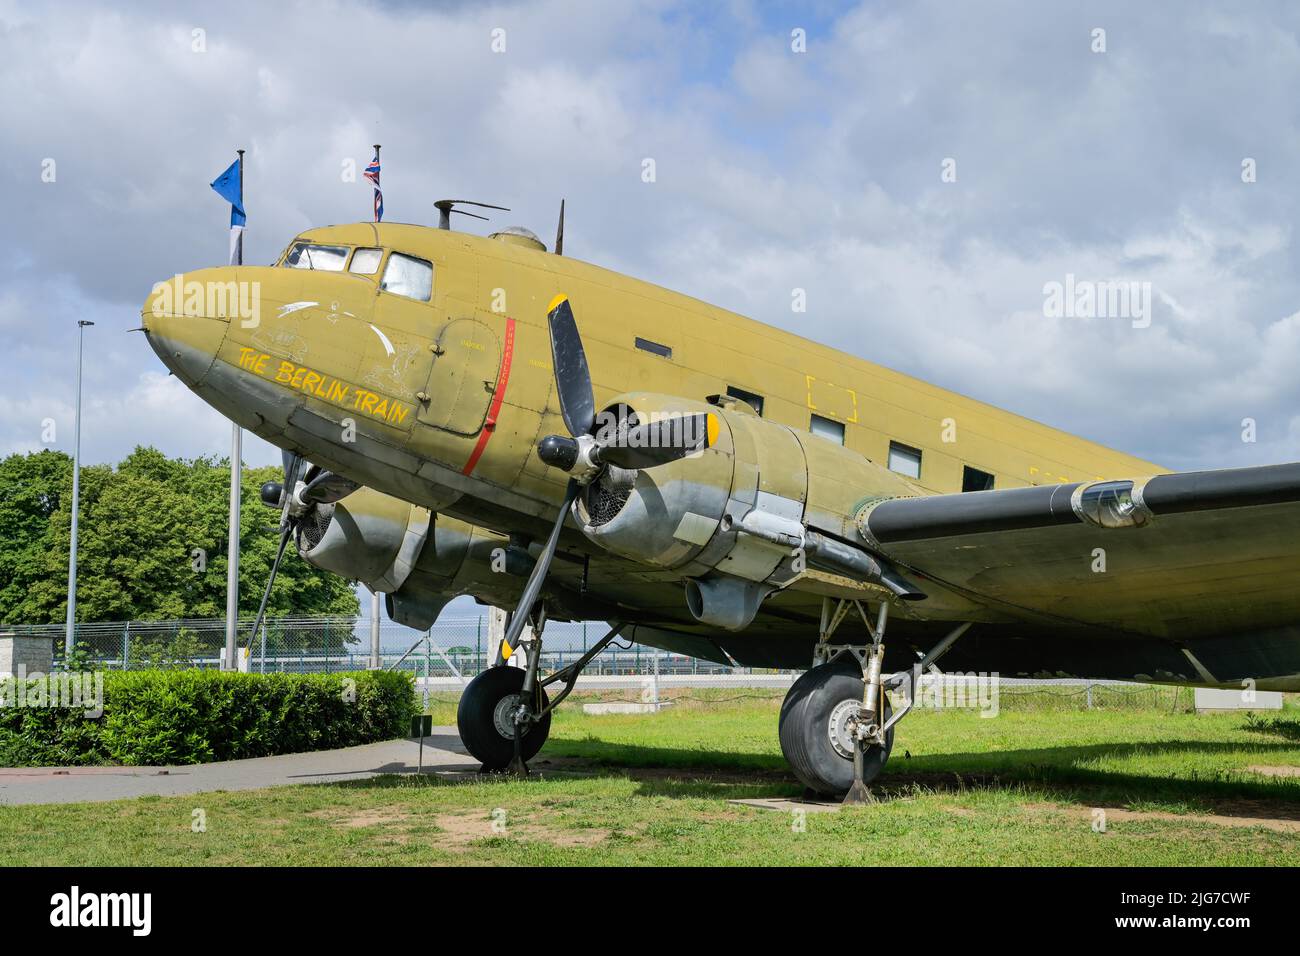 Sultana Bomber Douglas C-47 Dakota, Airlift Monument, Airport, Frankfurt am Main, Hesse, Germany Stock Photo